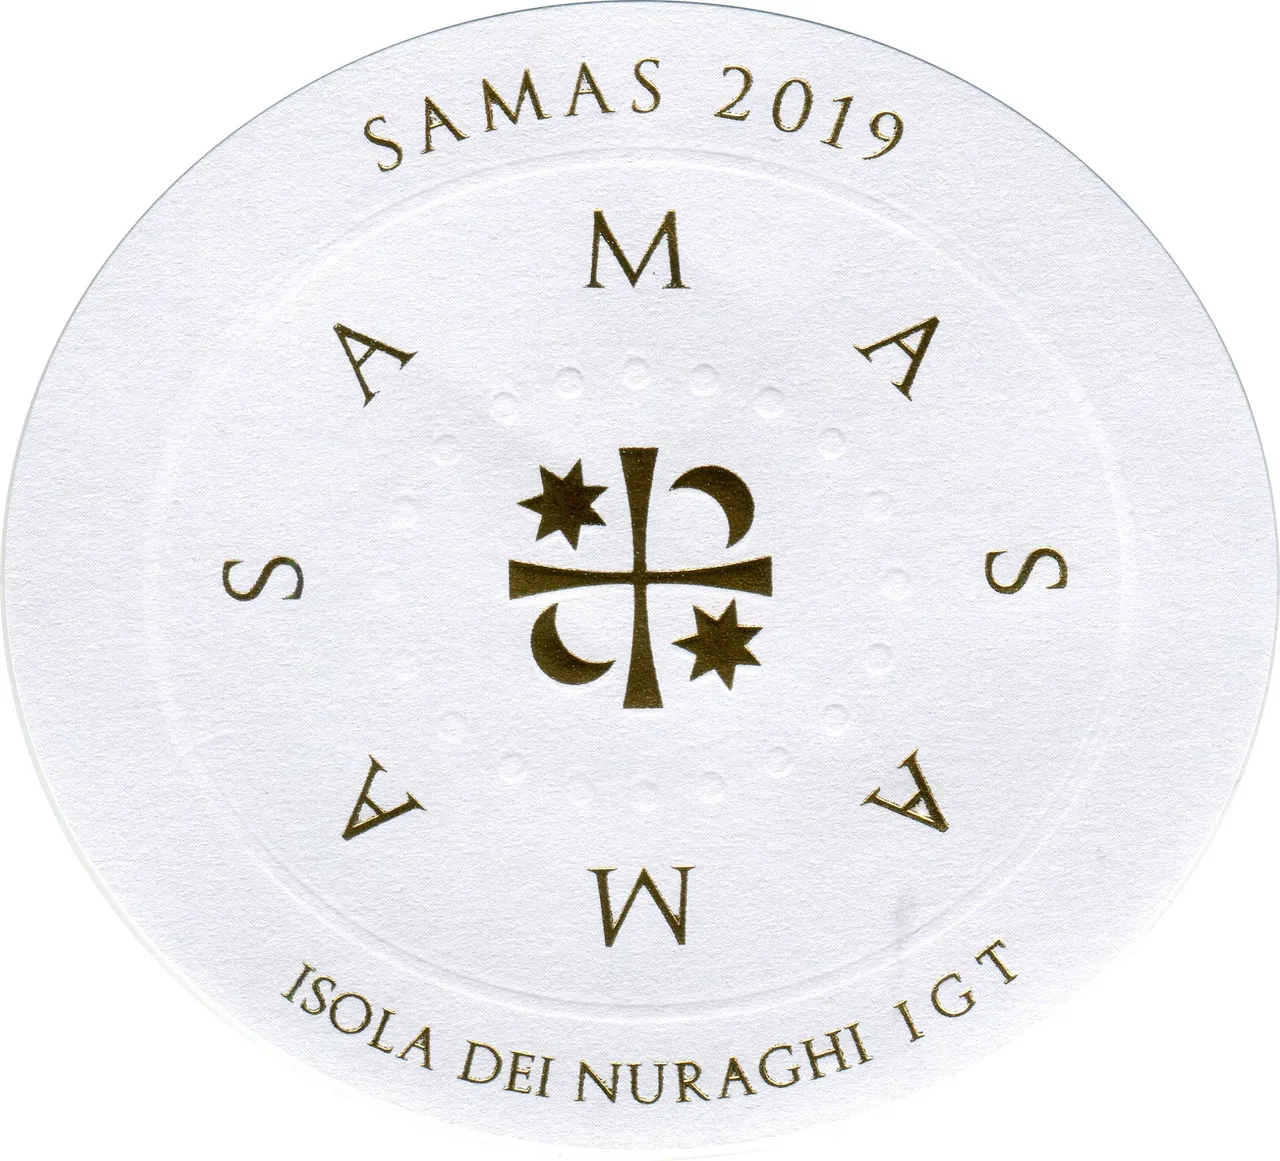 Etichetta Samas